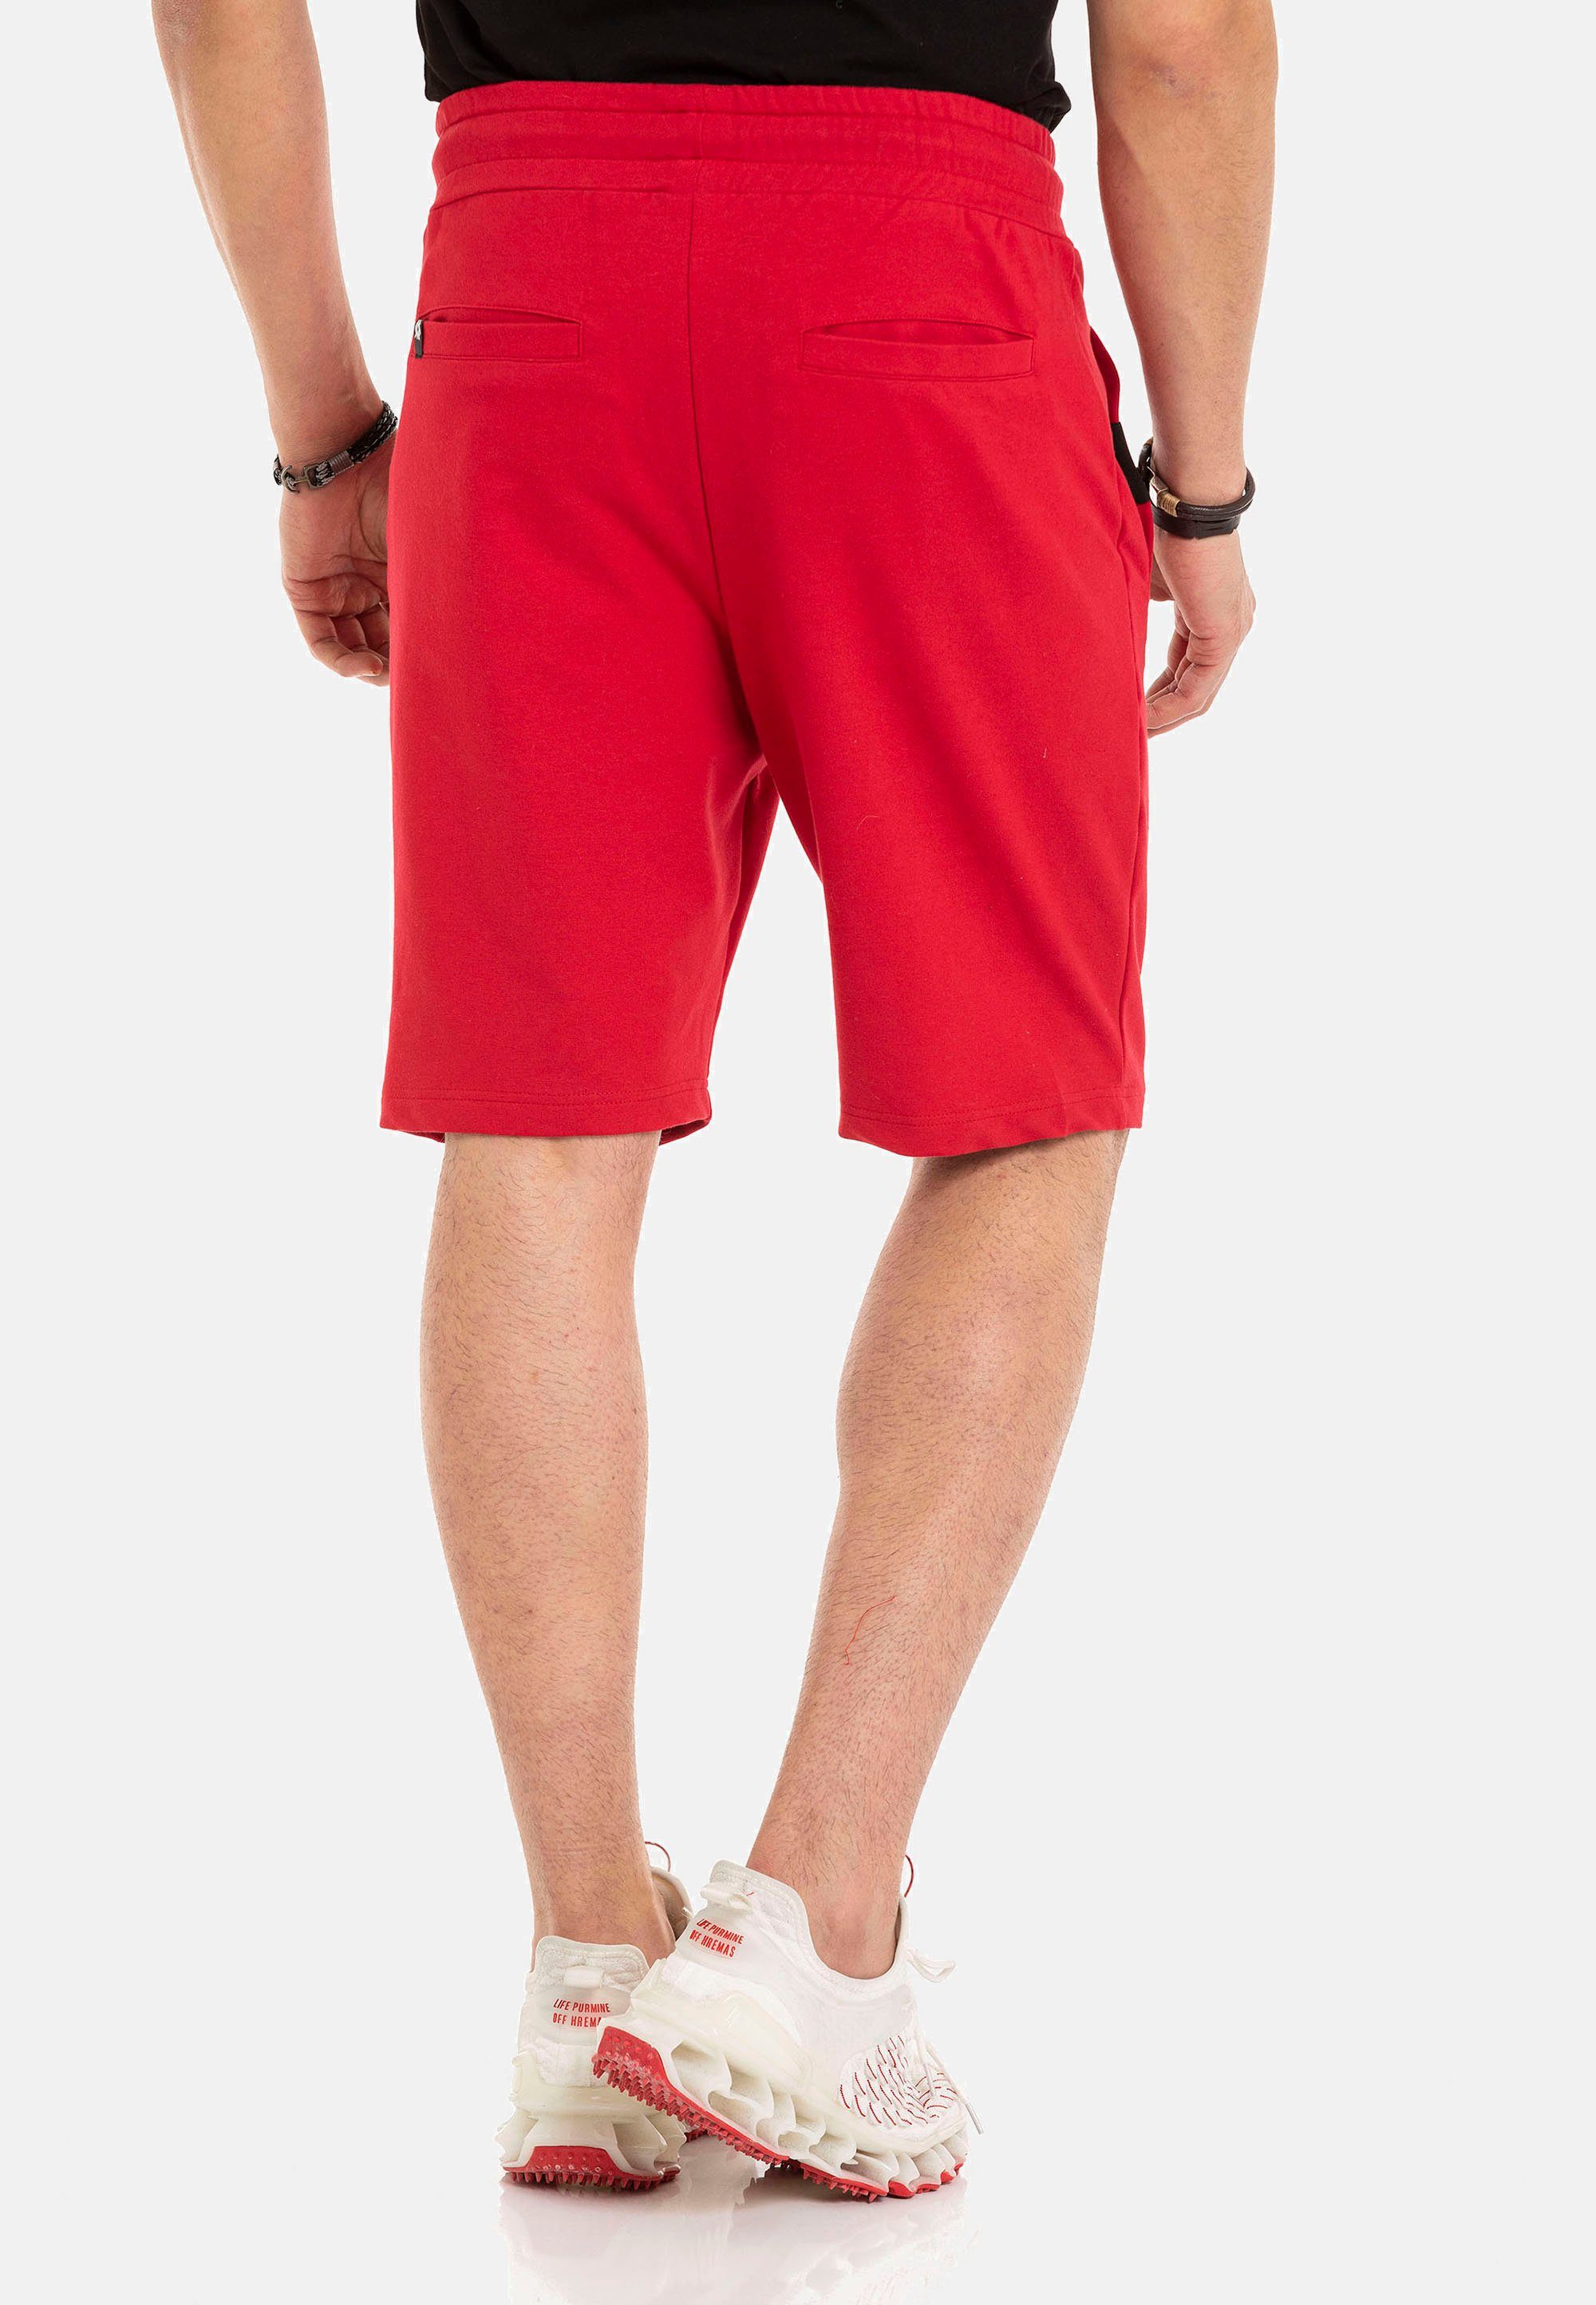 Cipo & Baxx sportlichem rot Look in Shorts